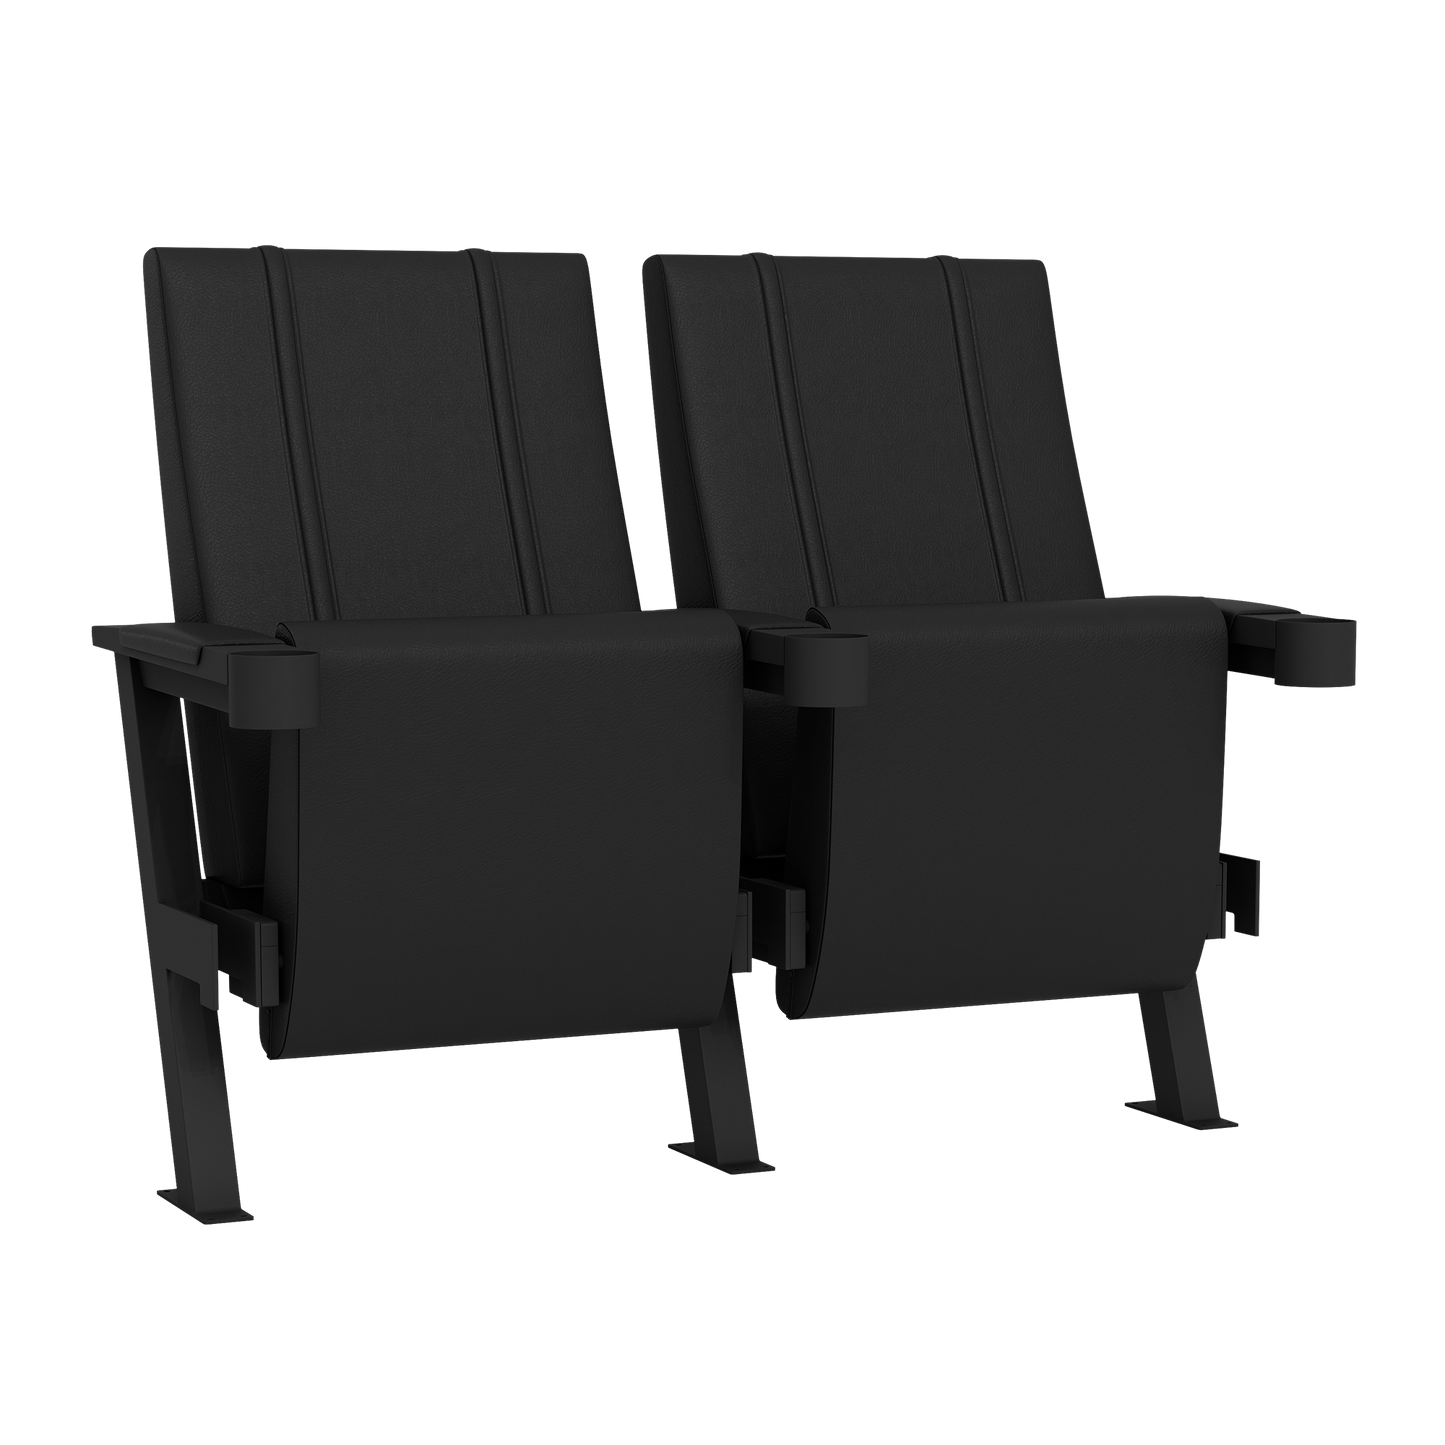 SuiteMax 3.5 VIP Seats with Washington Commanders Secondary Logo